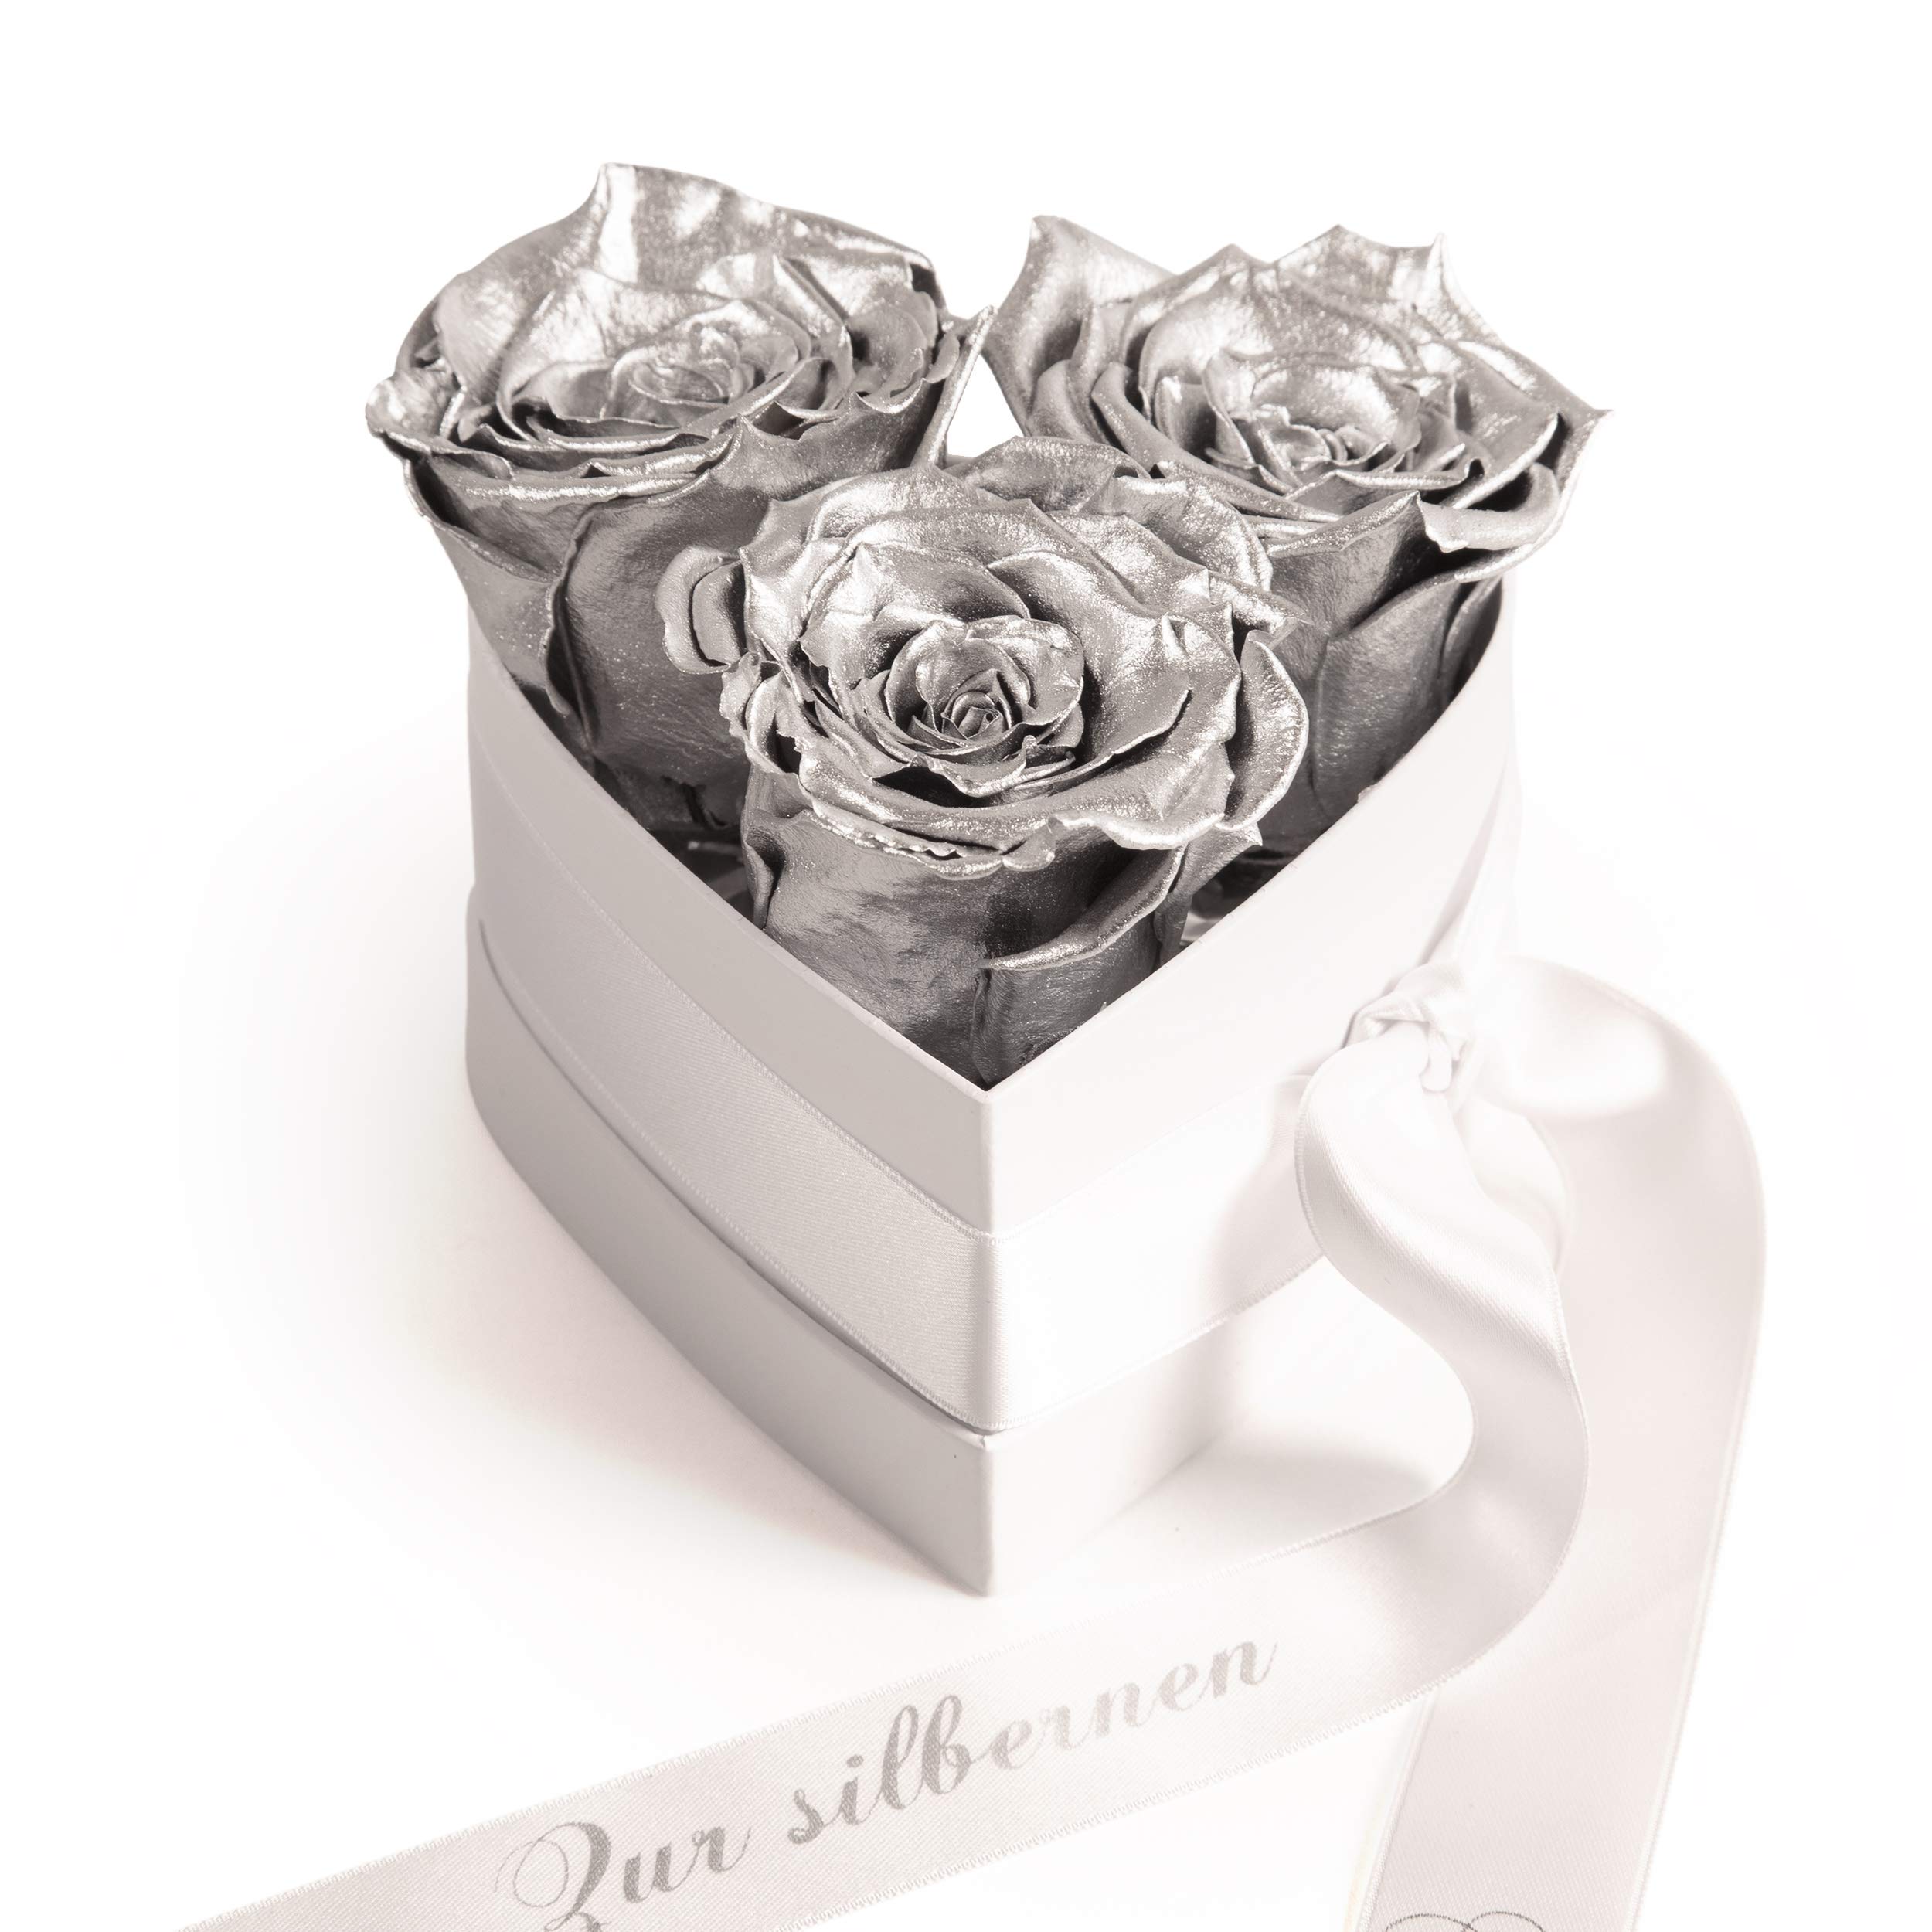 Infinity Rosenbox Silberhochzeit Geschenk Herzform Rosenherz konserviert Jubiläum 25 Jahre (Silber, 3 Infinity Rosen)